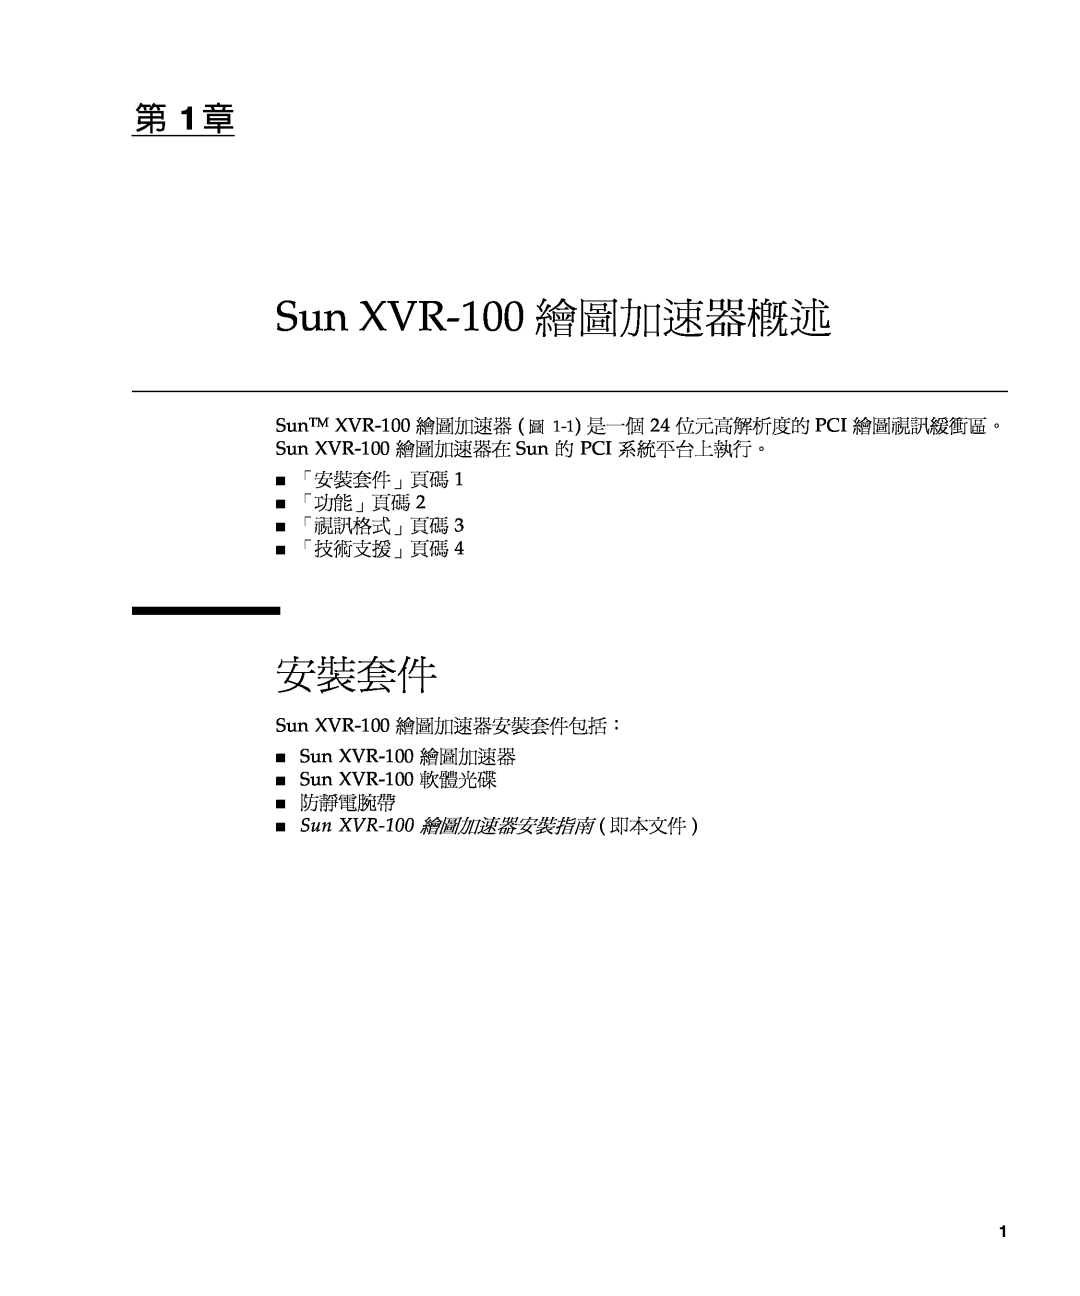 Sun Microsystems Sun XVR-100 繪圖加速器概述, 第 1 章, 「安裝套件」頁碼 「功能」頁碼 「視訊格式」頁碼 「技術支援」頁碼, 防靜電腕帶, Sun XVR-100 繪圖加速器安裝指南 即本文件 